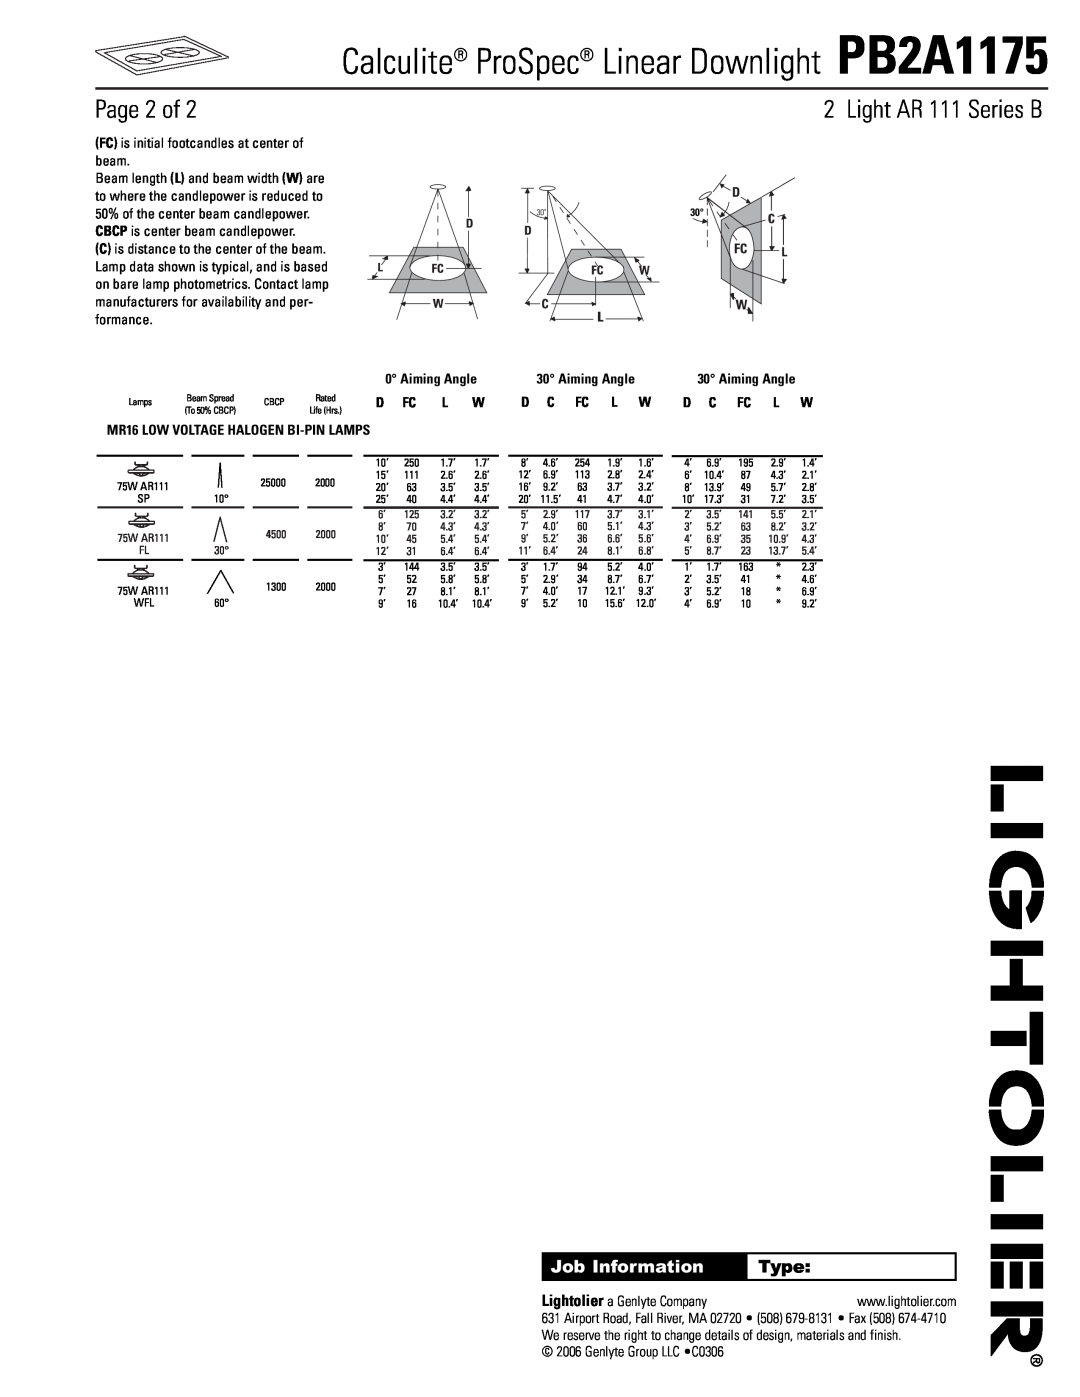 Lightolier manual Page 2 of, Light AR 111 Series B, Calculite ProSpec Linear Downlight PB2A1175, Job Information, Type 